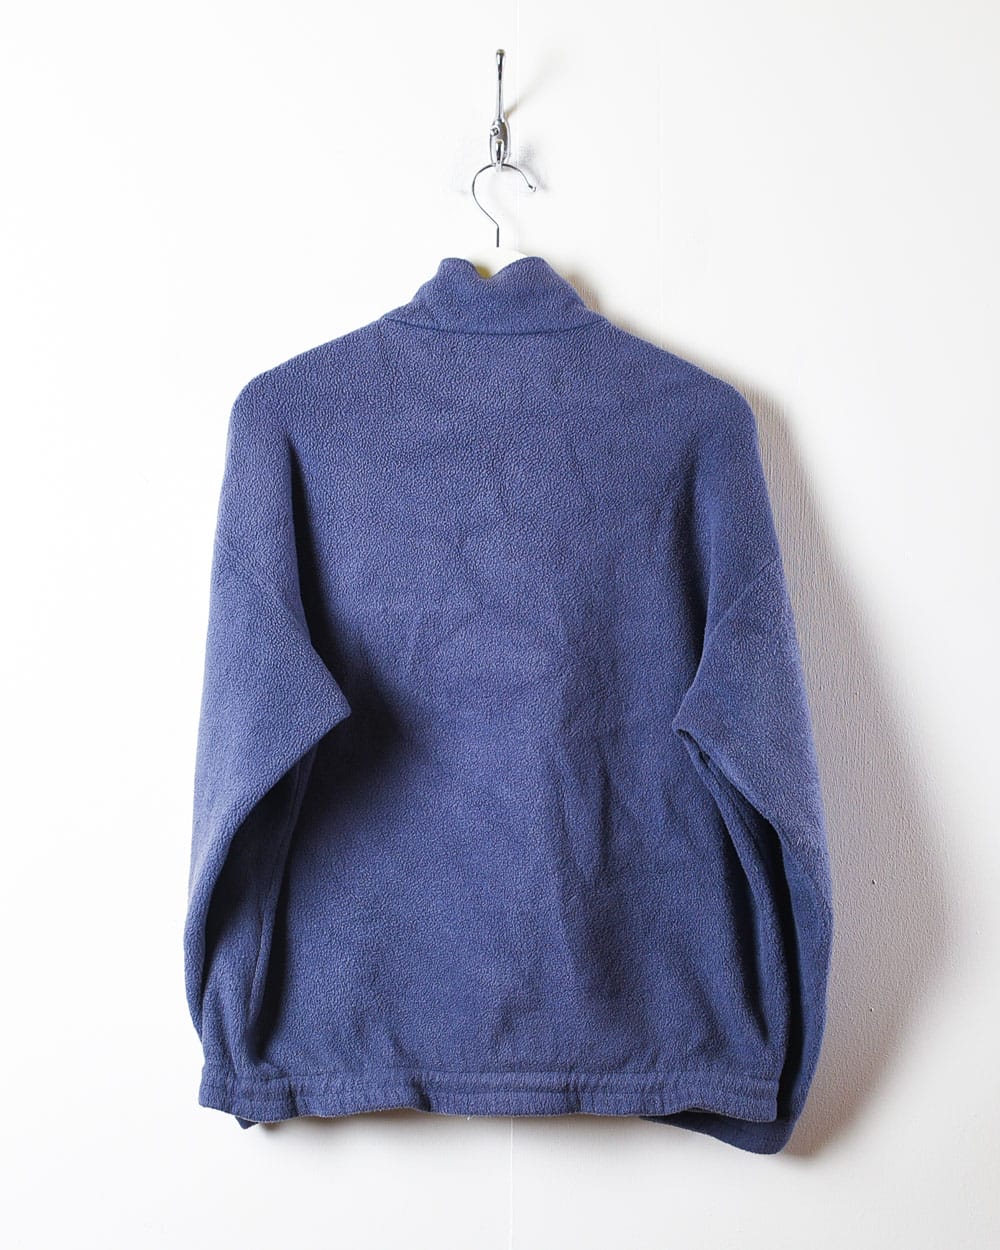 Fila Womens 1/4 Zip Pullover Sweatshirt (Grey/Lavender/White